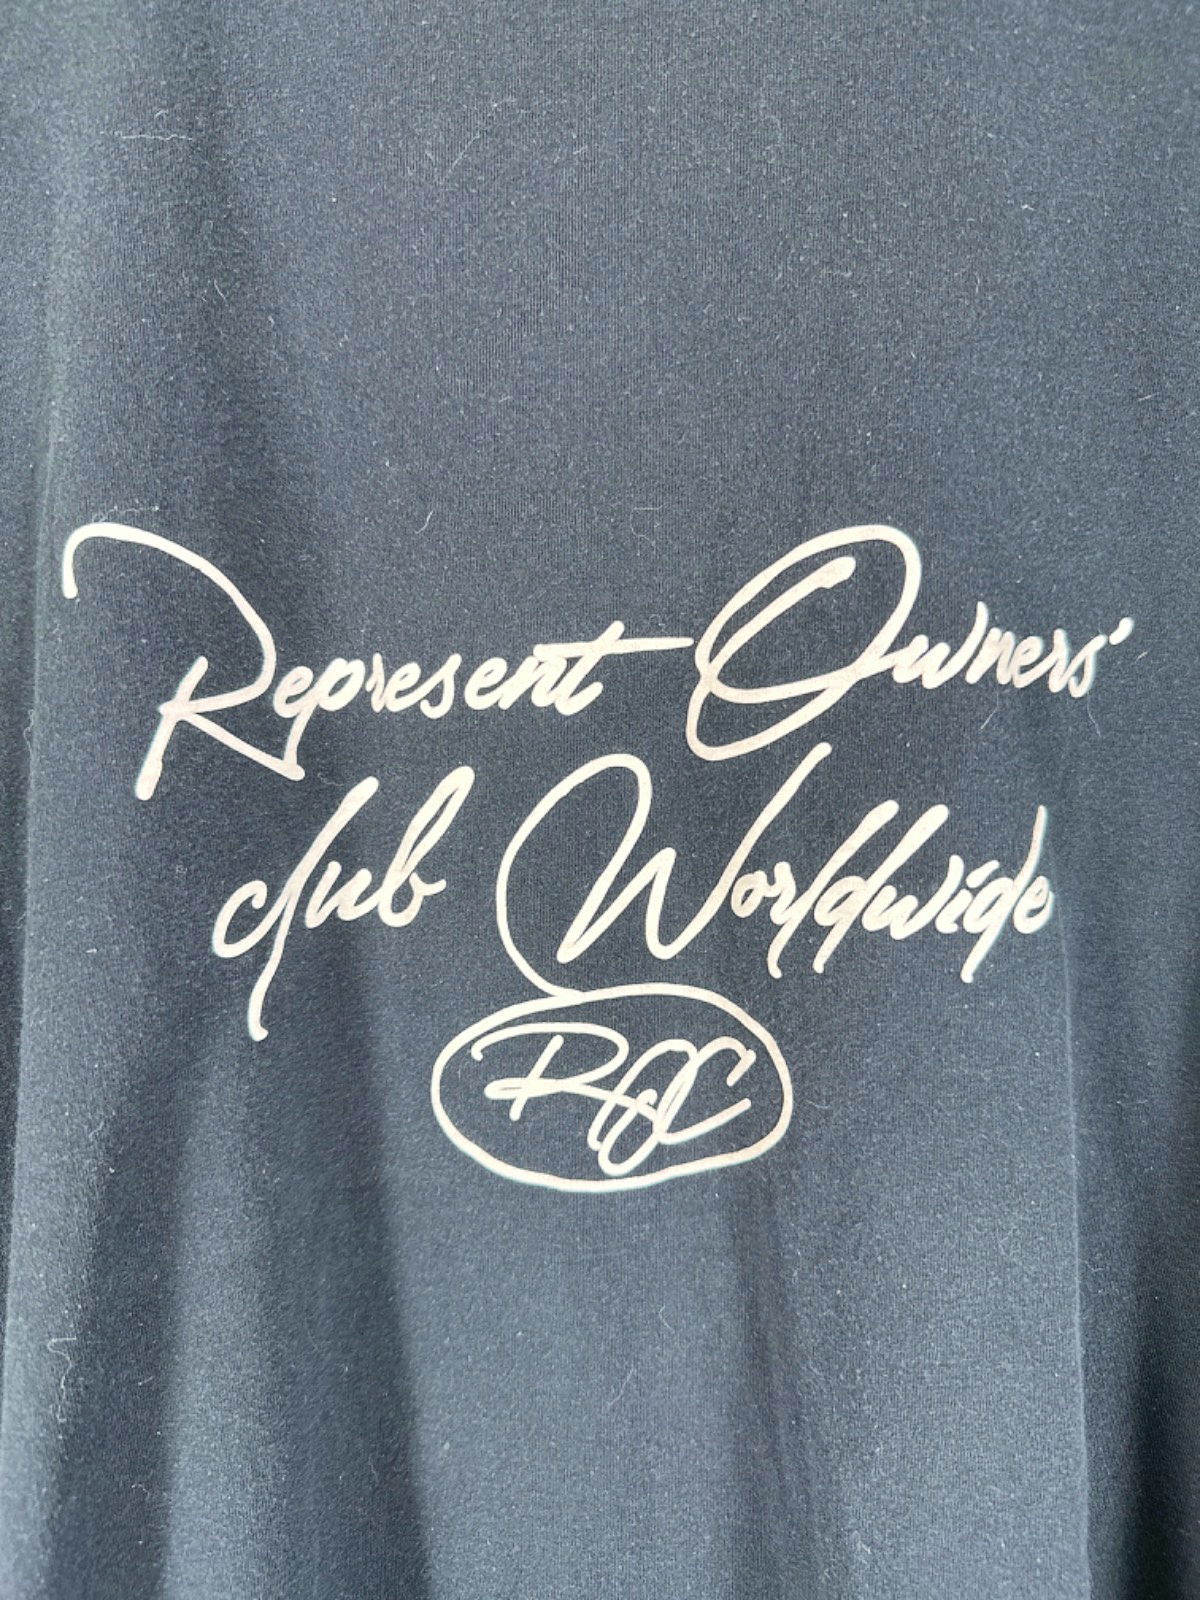 Represent Black Owners' Club Worldwide T-Shirt UK L